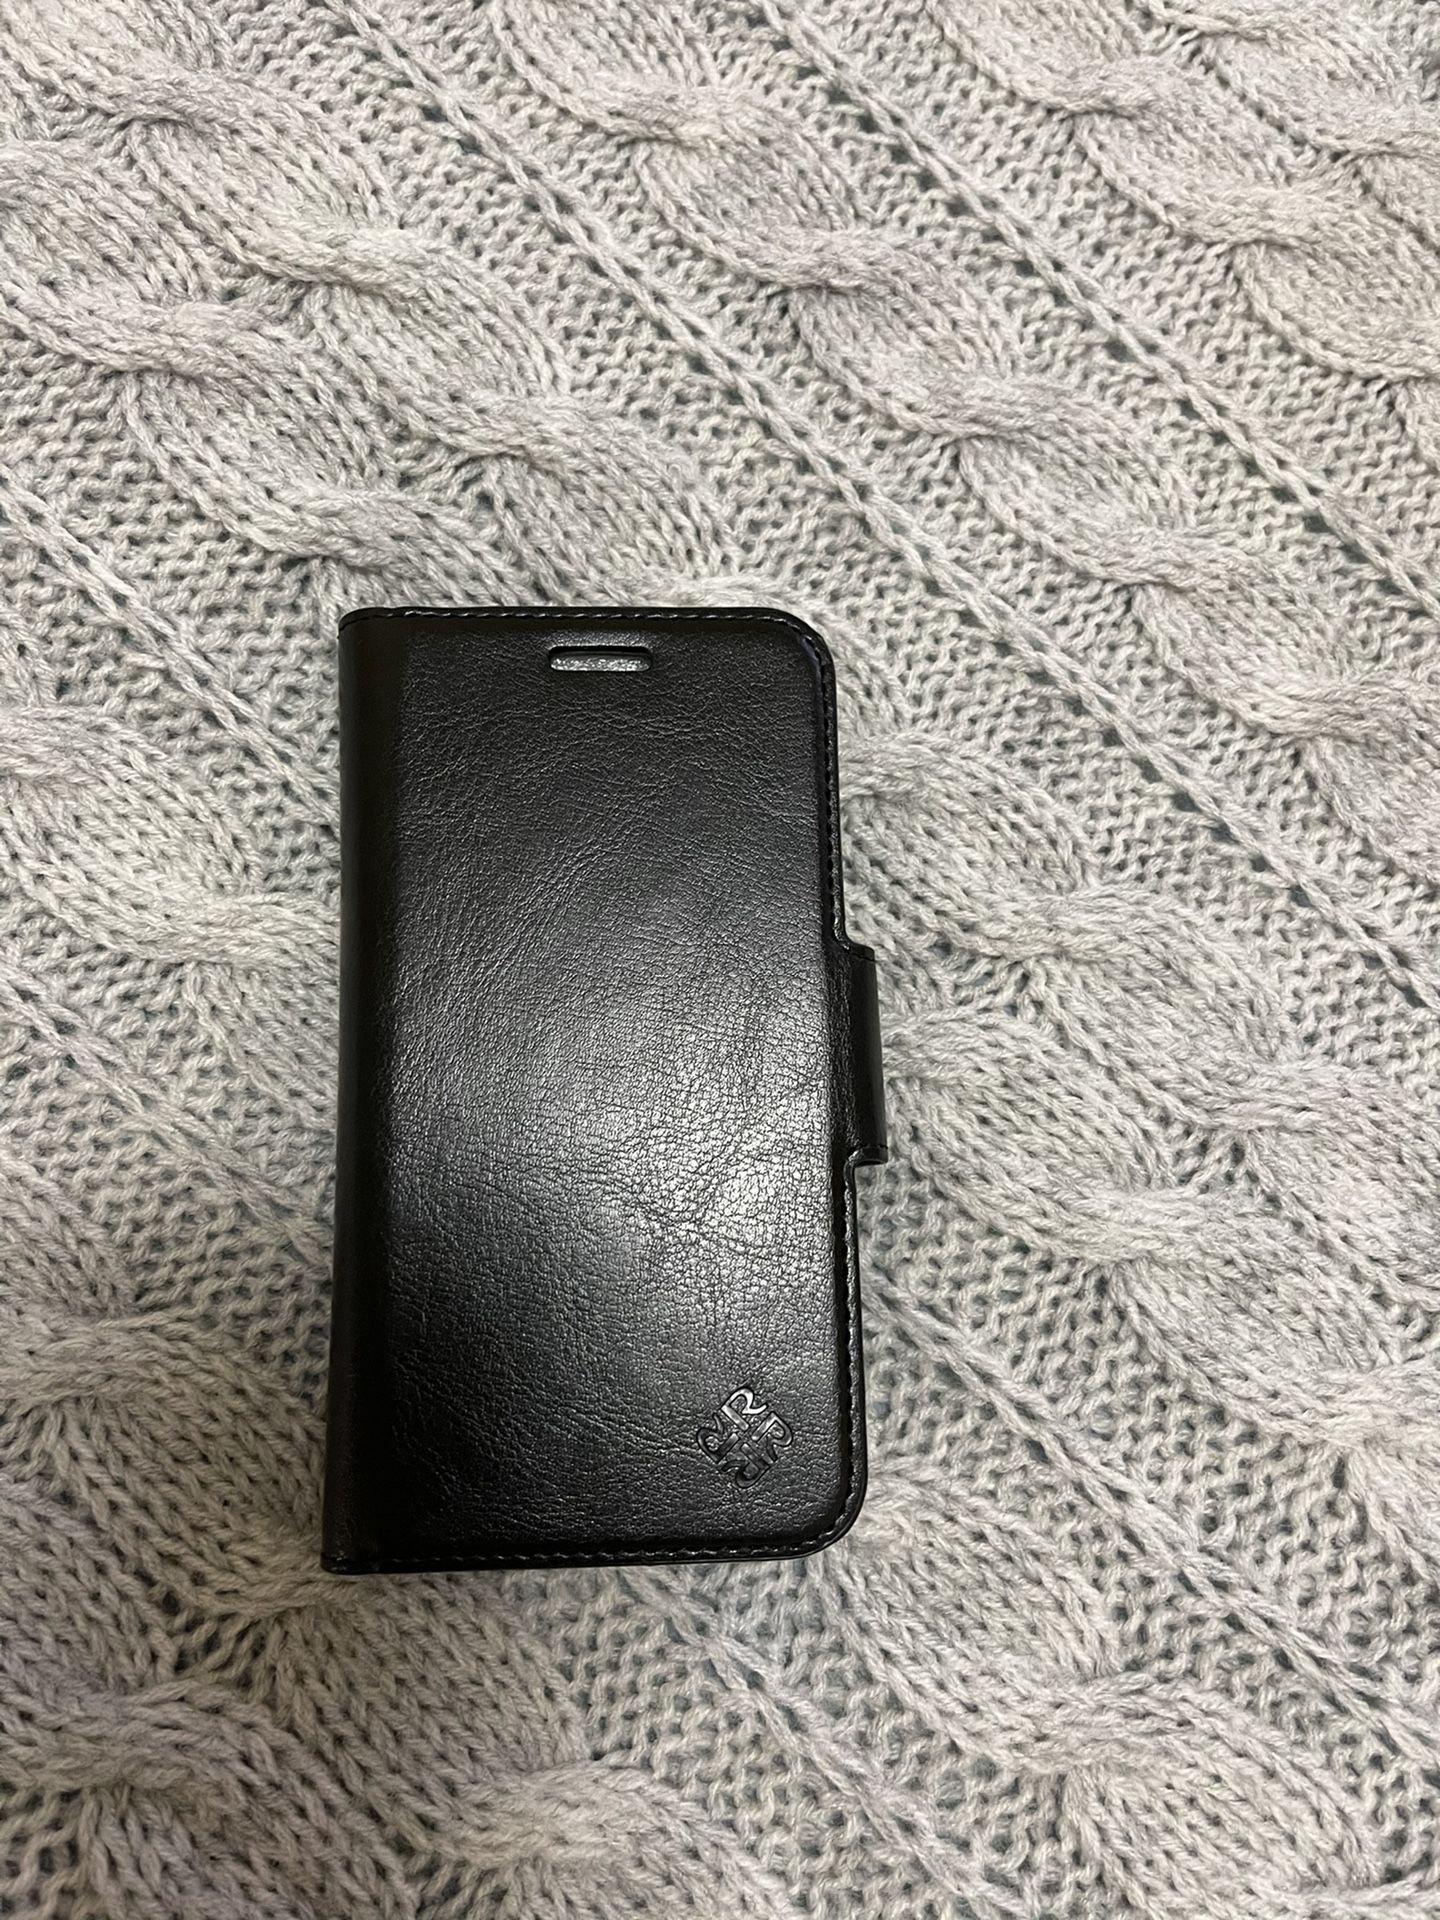 ROOCASE iPhone 11 Pro Wallet Case, Vegan Leather Flip Case  Detachable iPhone Case with Kickstand, Black